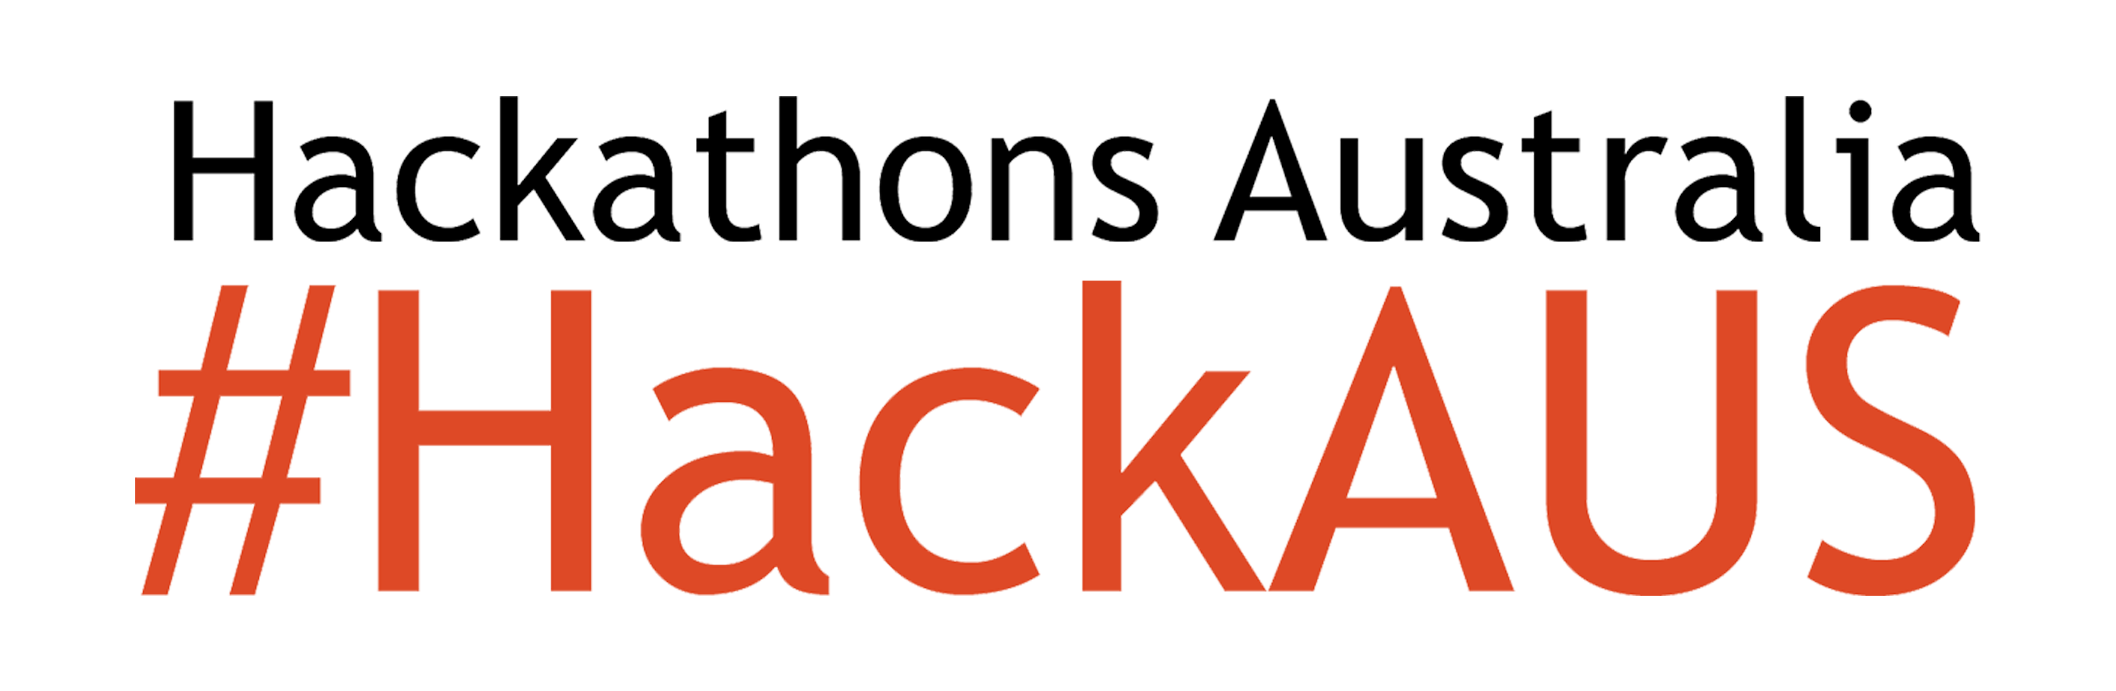 Hackathons Australia